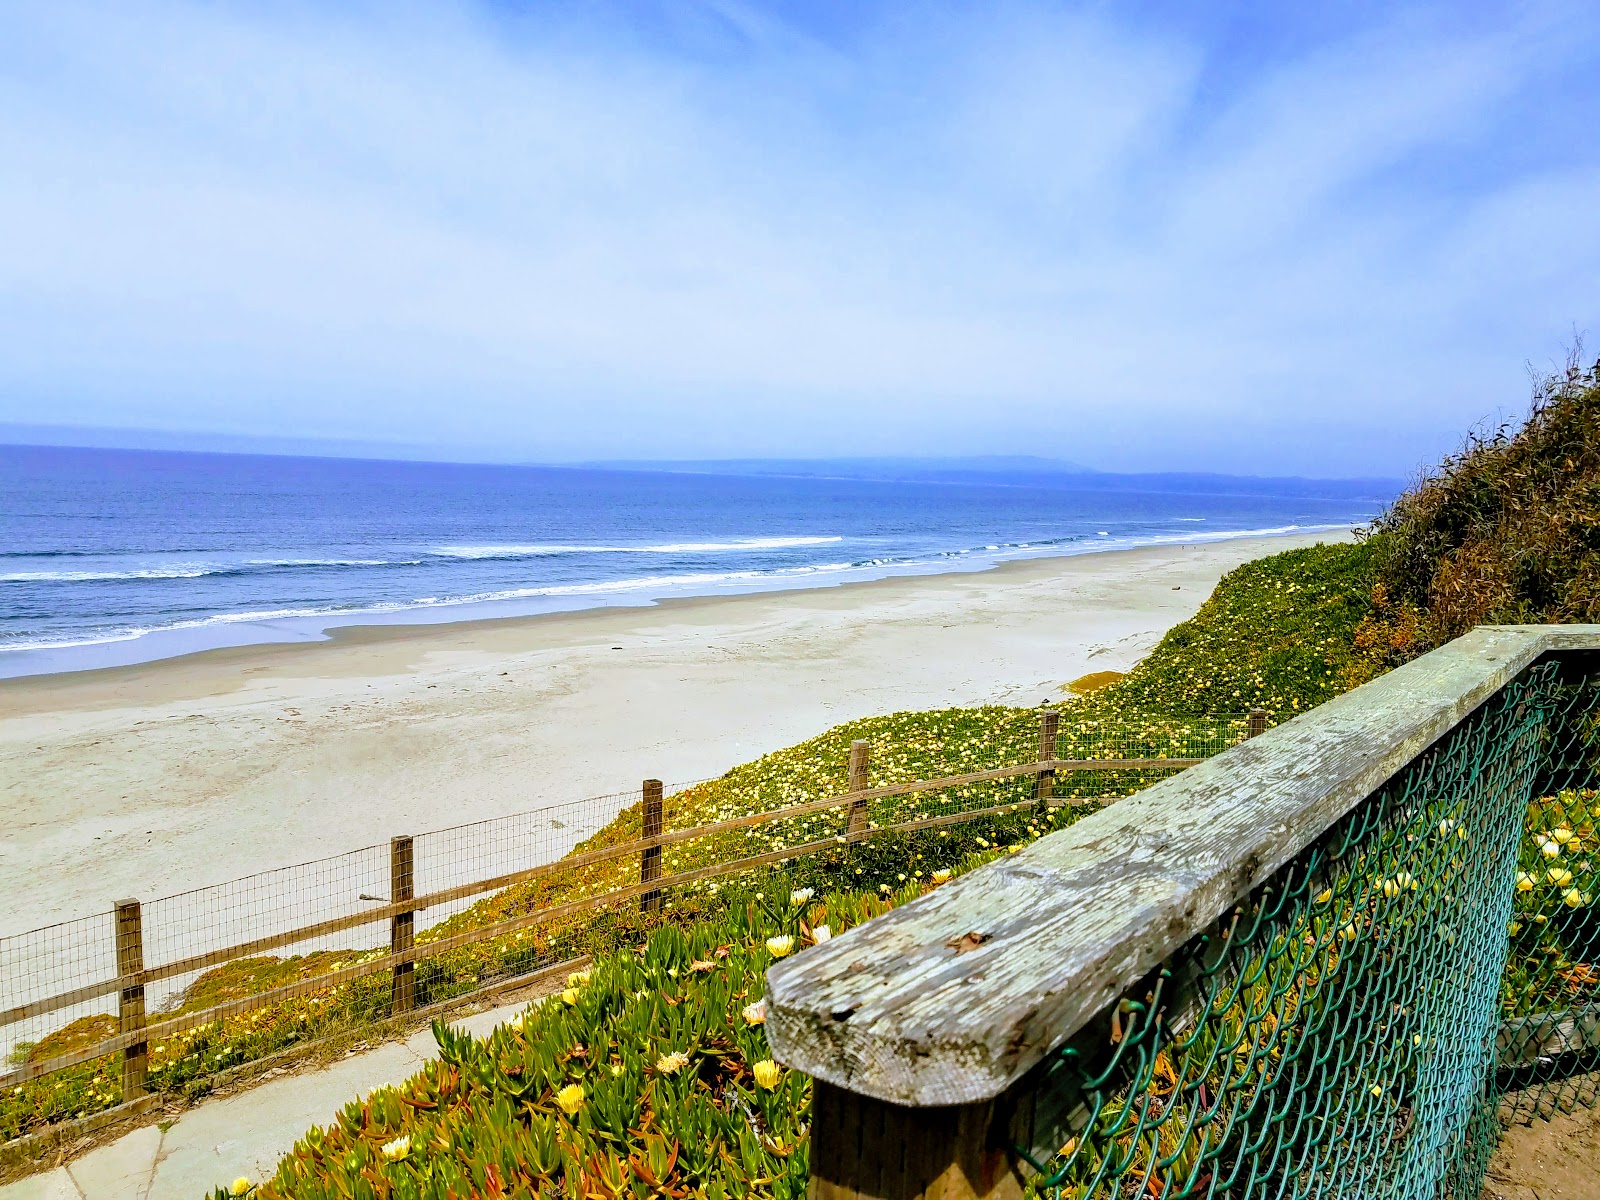 Fotografija Sunset Beach nahaja se v naravnem okolju